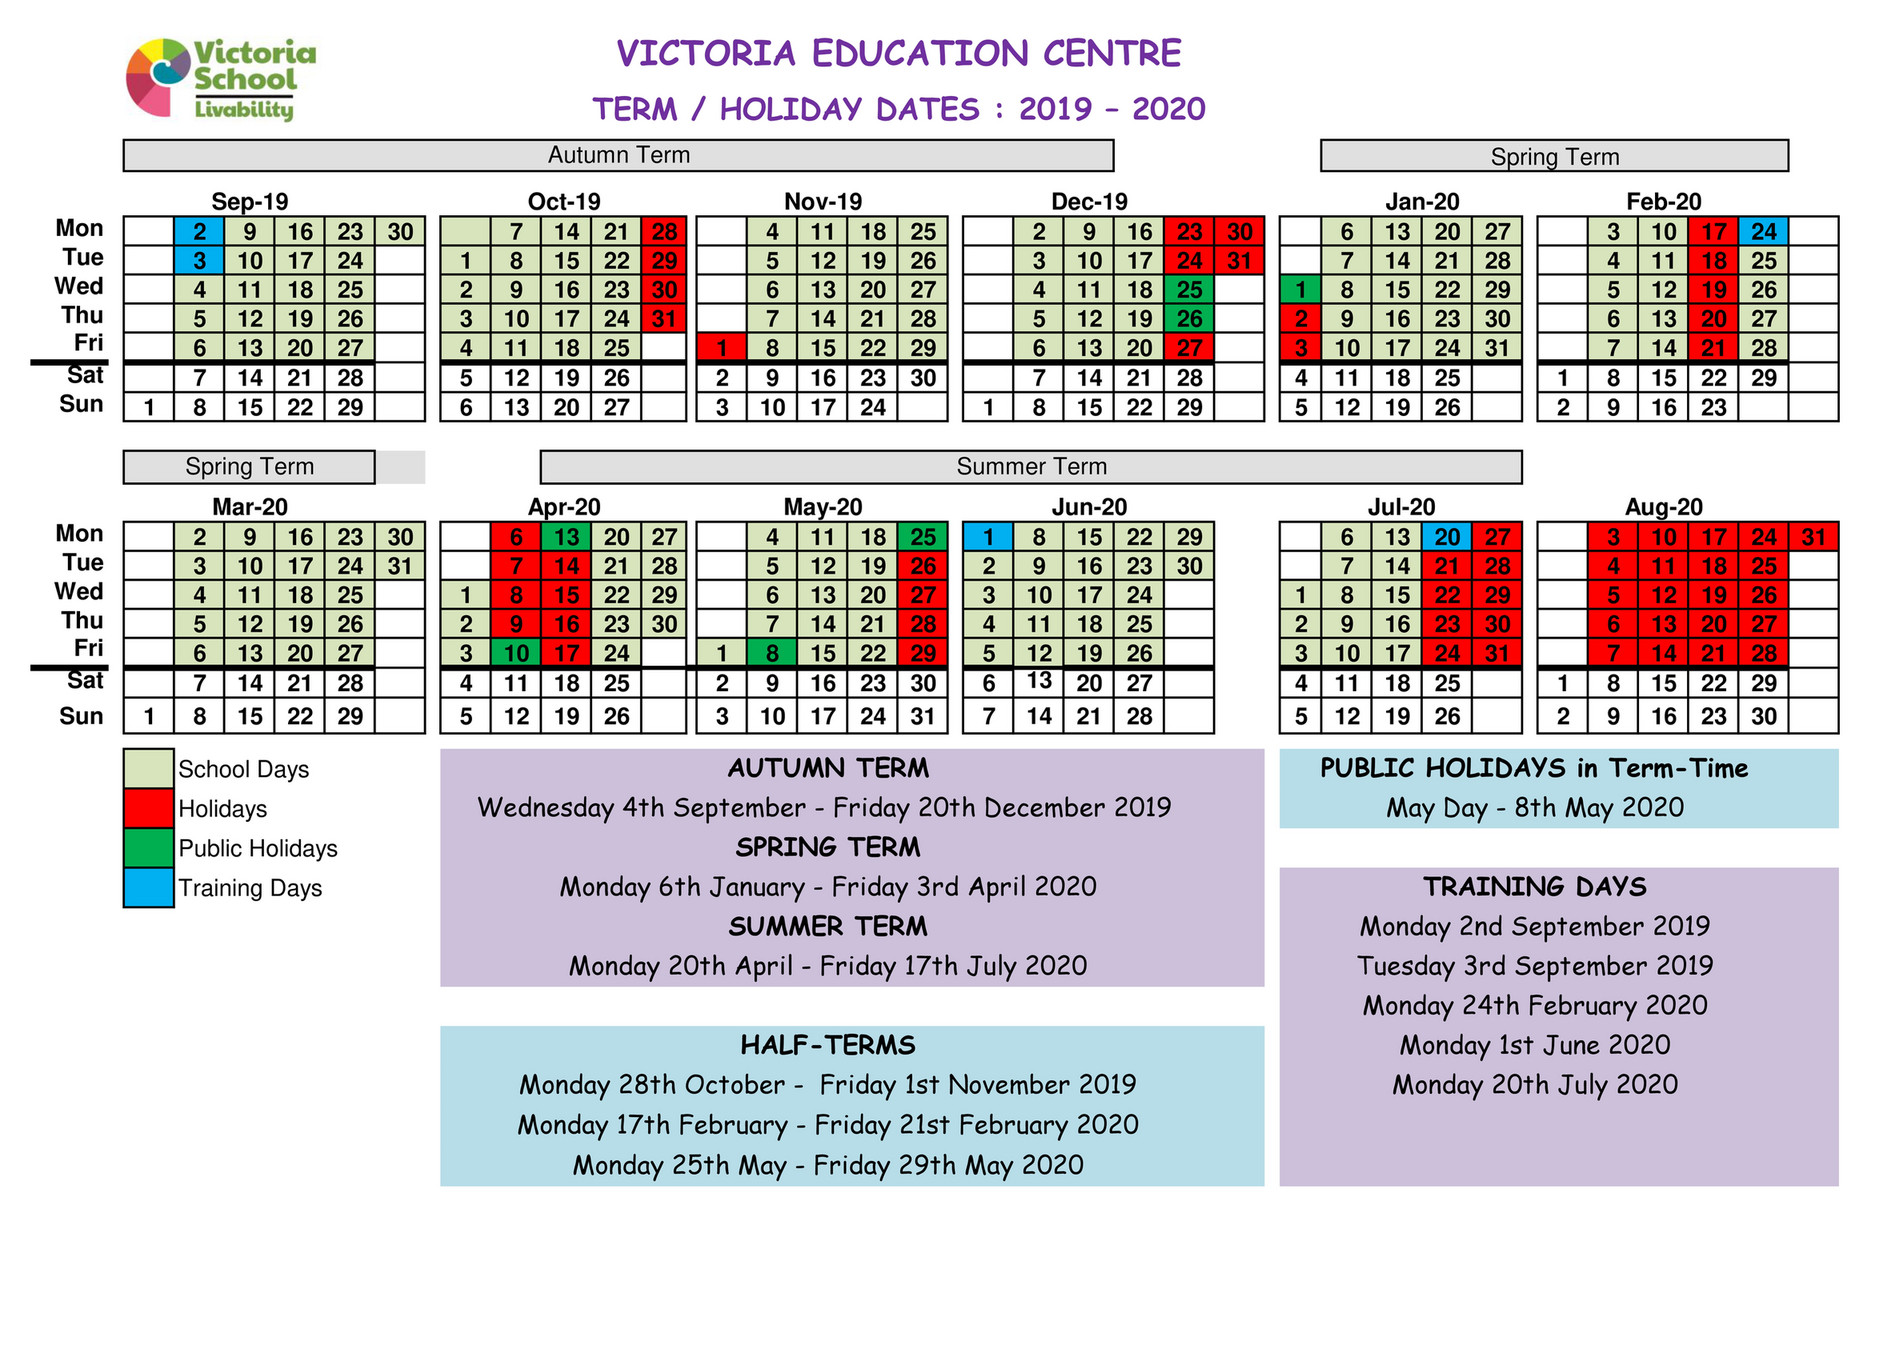 Victoria Education Centre Victoria Education Centre Term Dates 2019